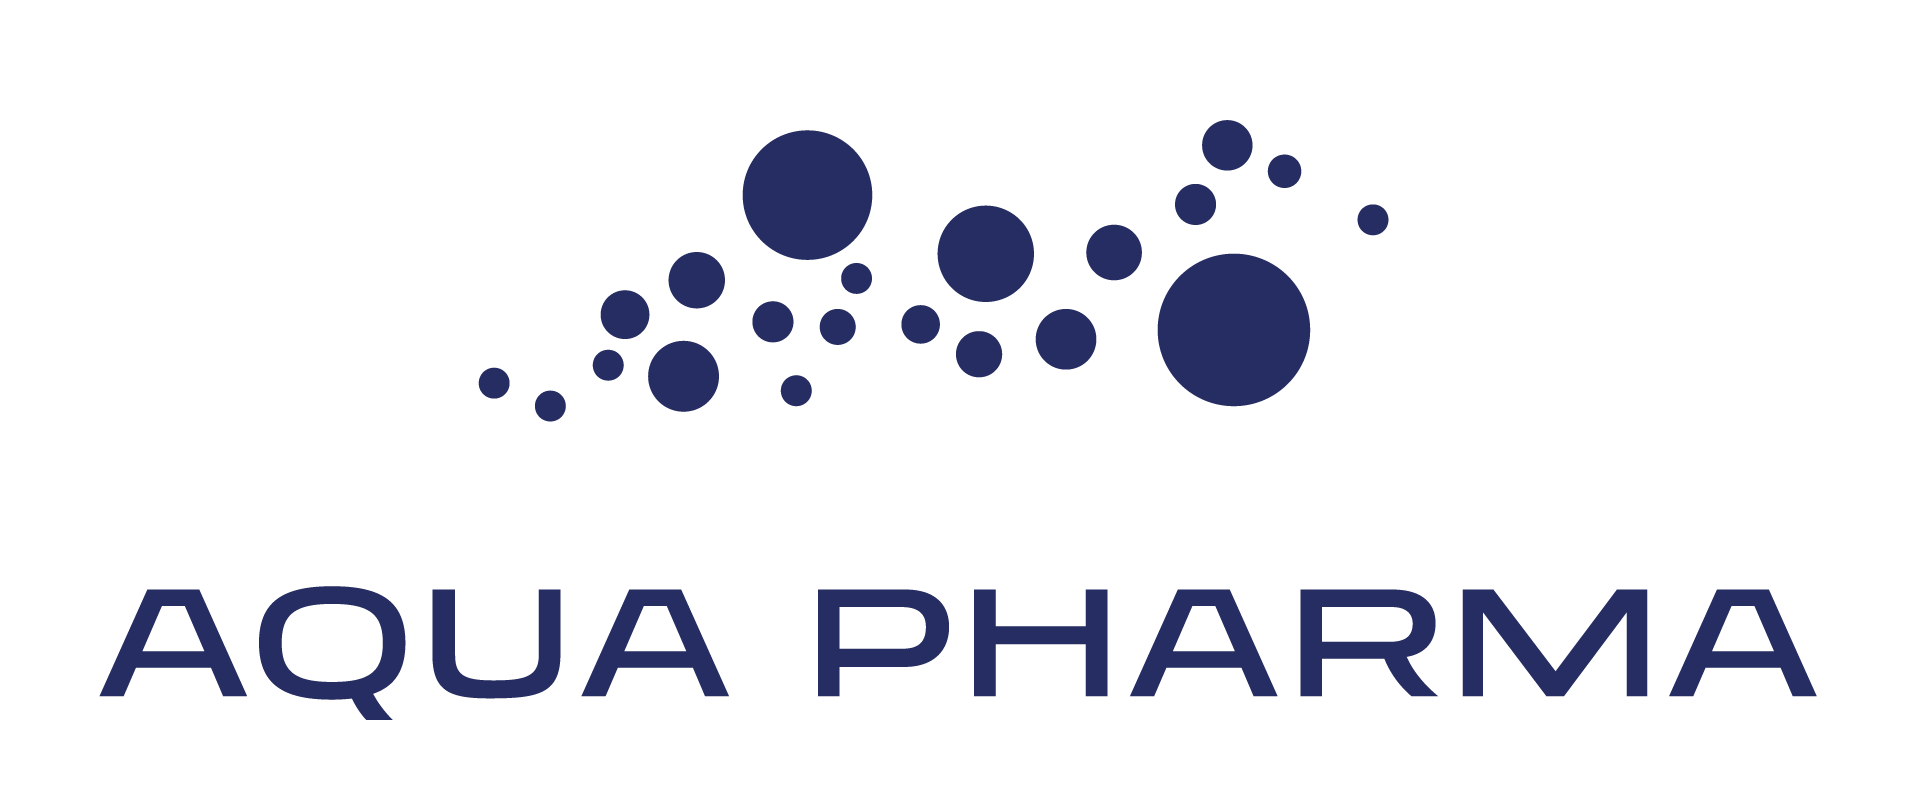 Aqua Pharma Group (APG)